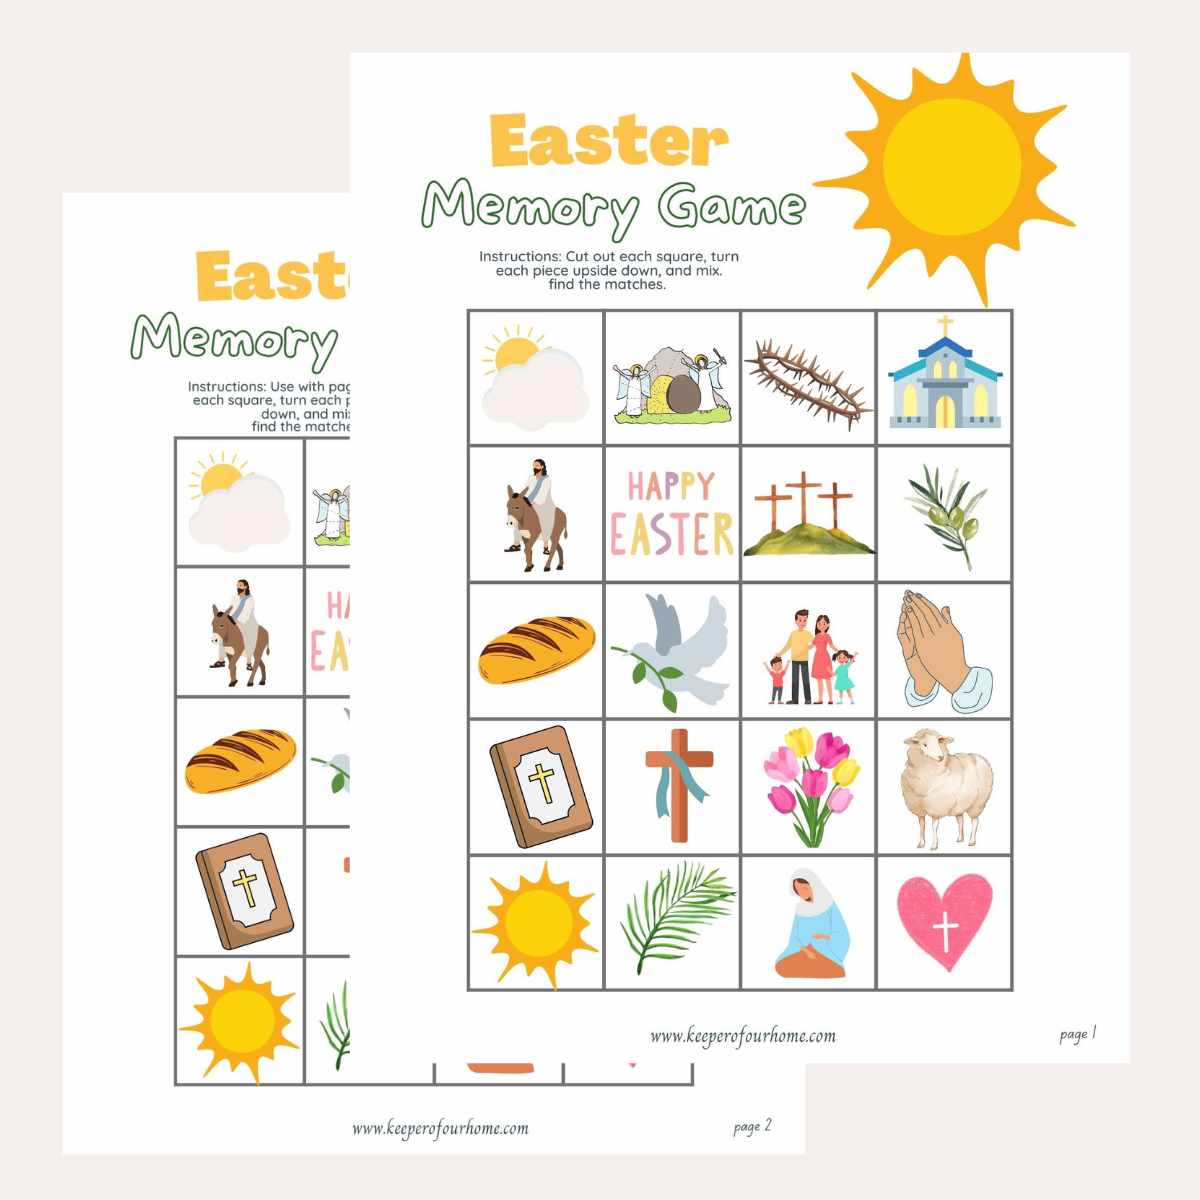 Christian Easter memory game